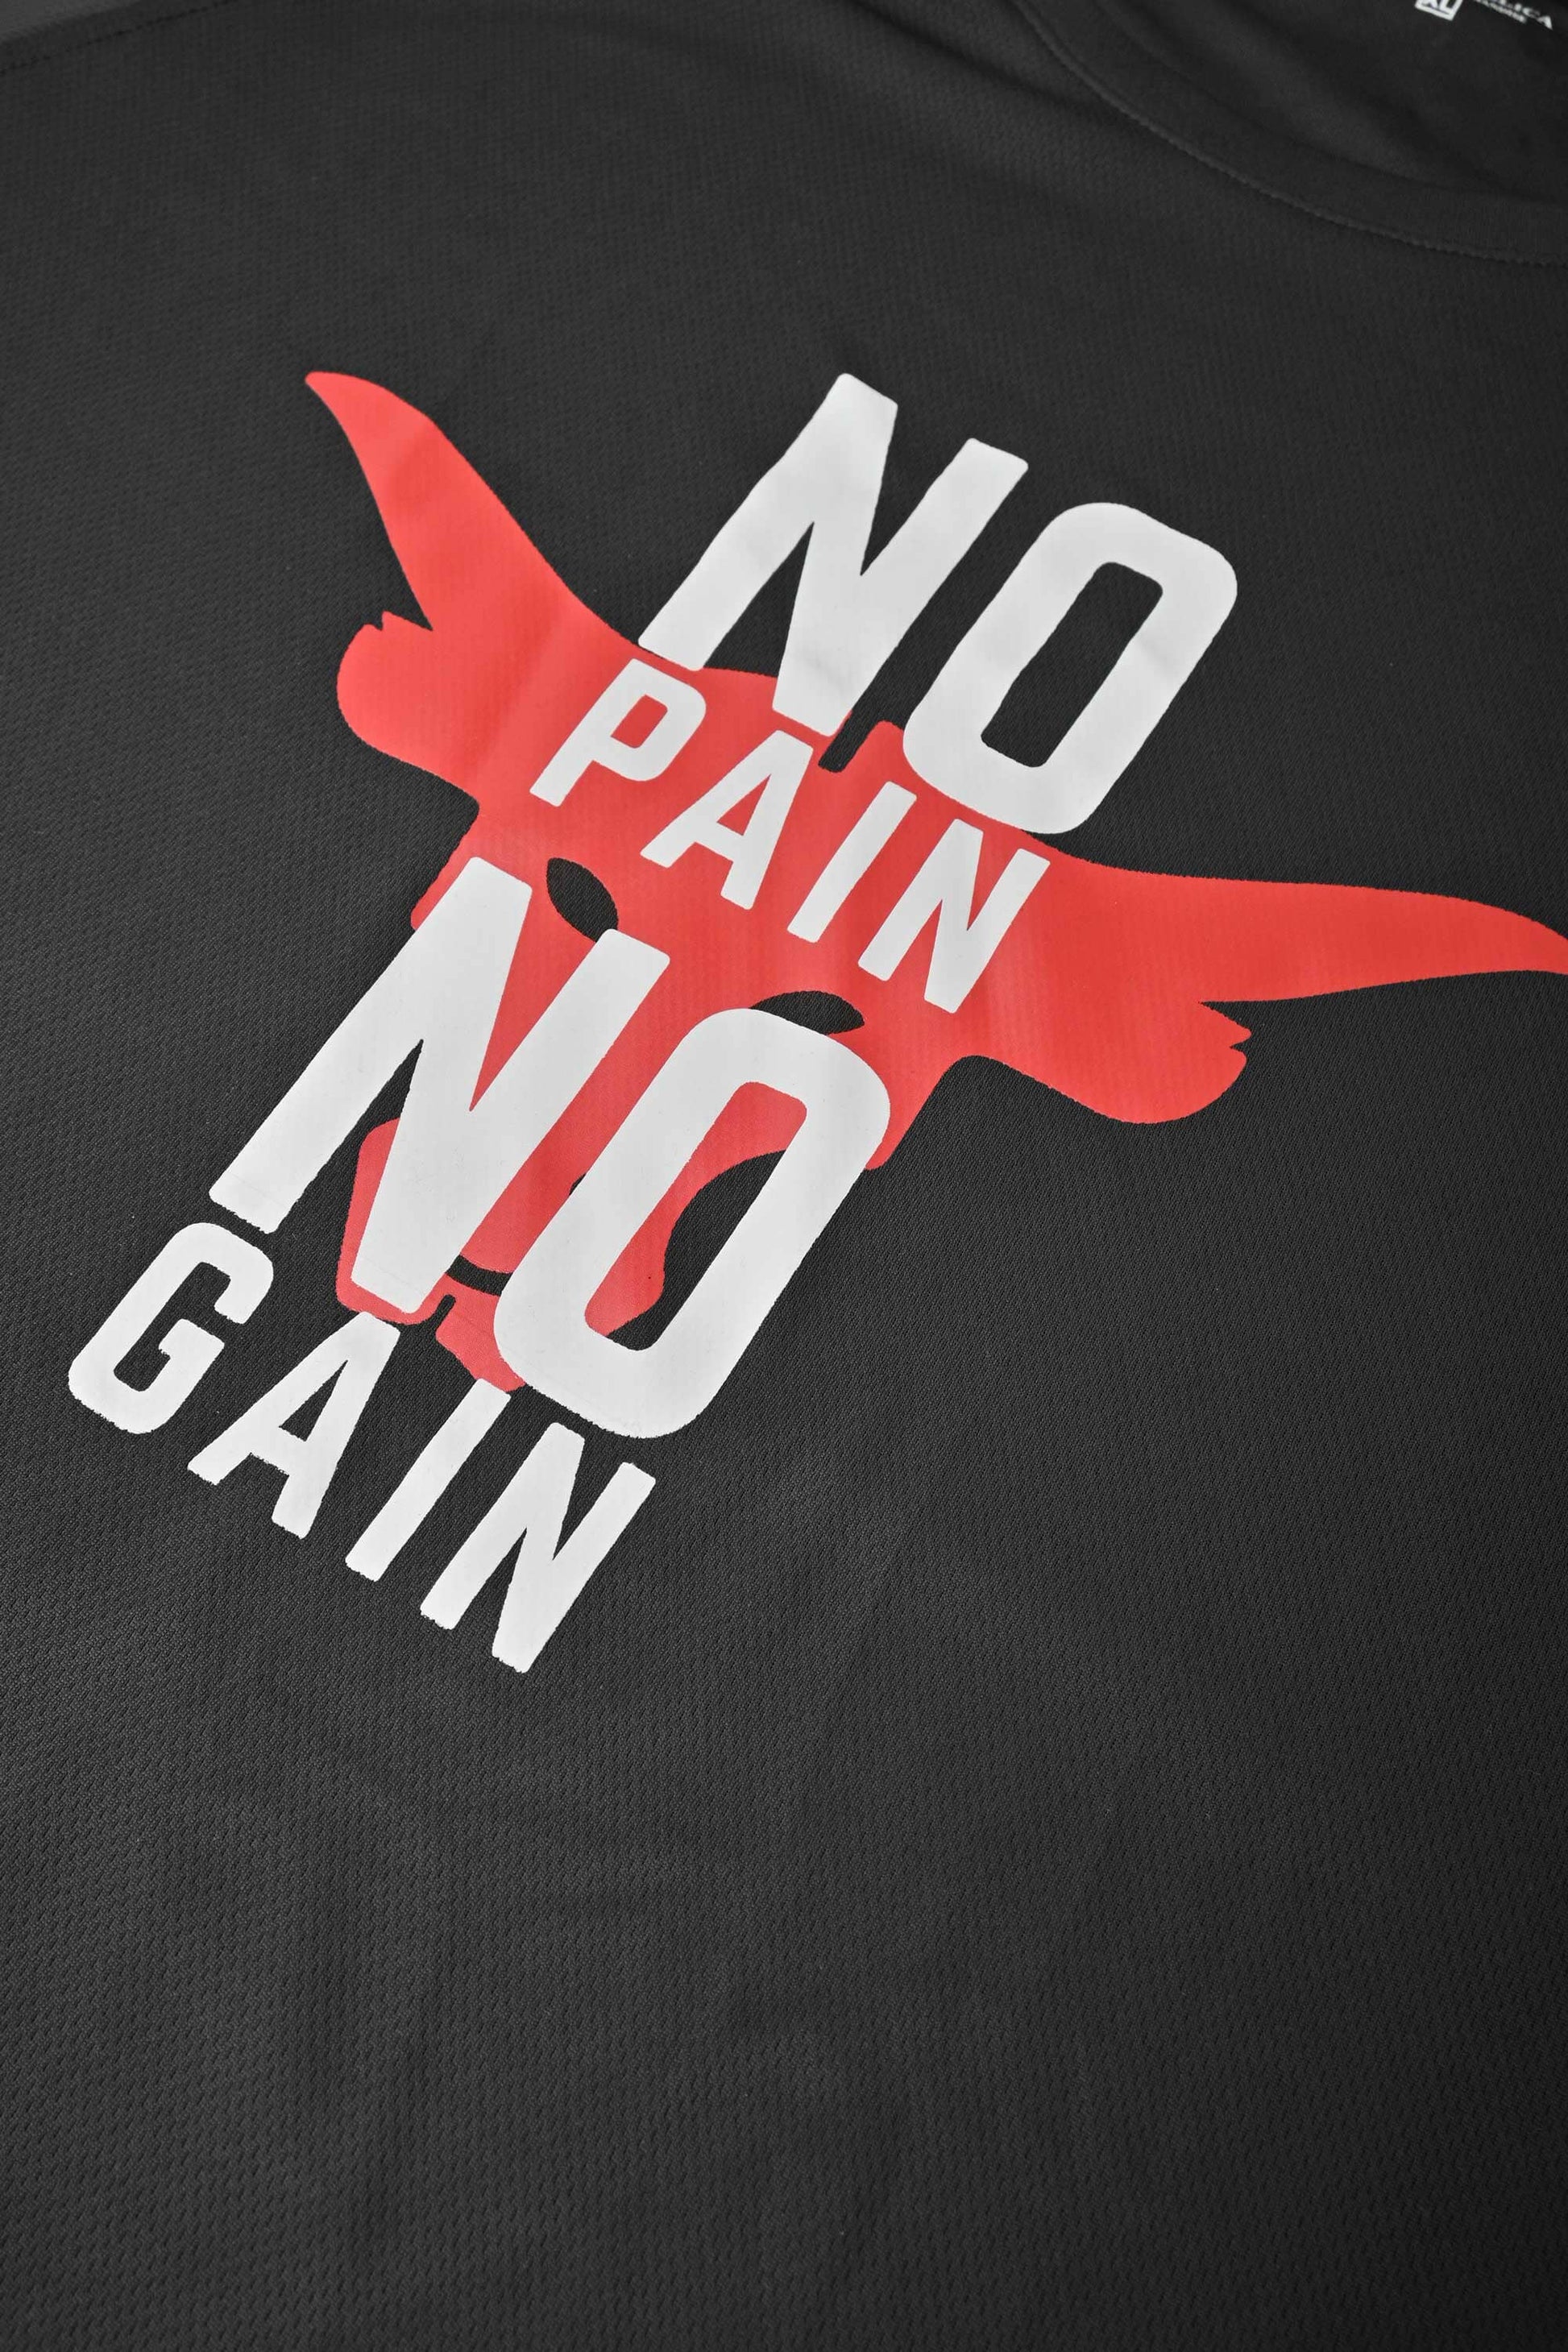 Polo Republica Men's No Pain No Gain Printed Activewear Tee Shirt